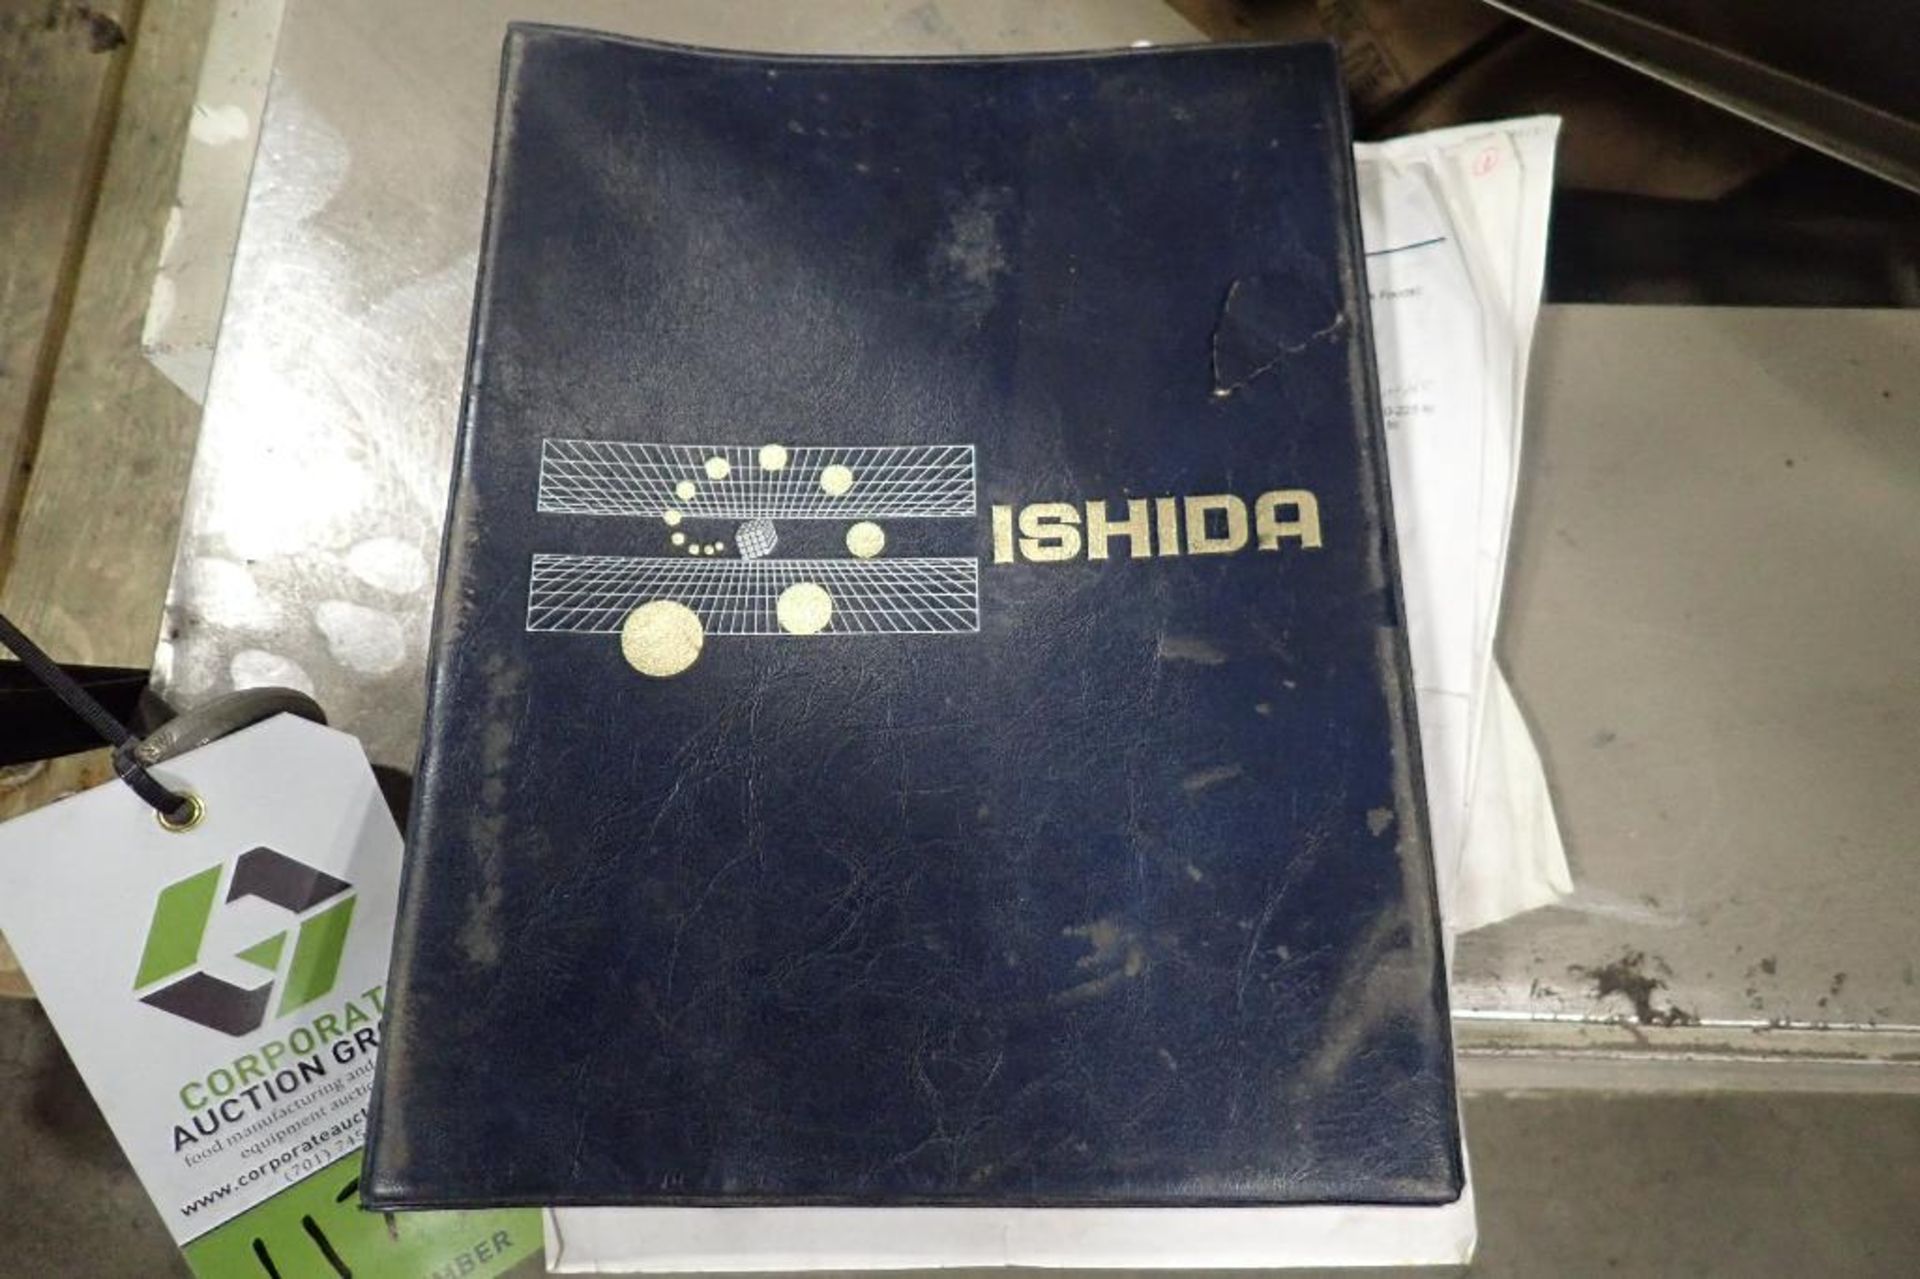 1992 Ishida 16 head scale, Model CCW-Z-216B-D/30-PB, SN 19810. **Rigging Fee: $200** (Located in 370 - Image 6 of 7